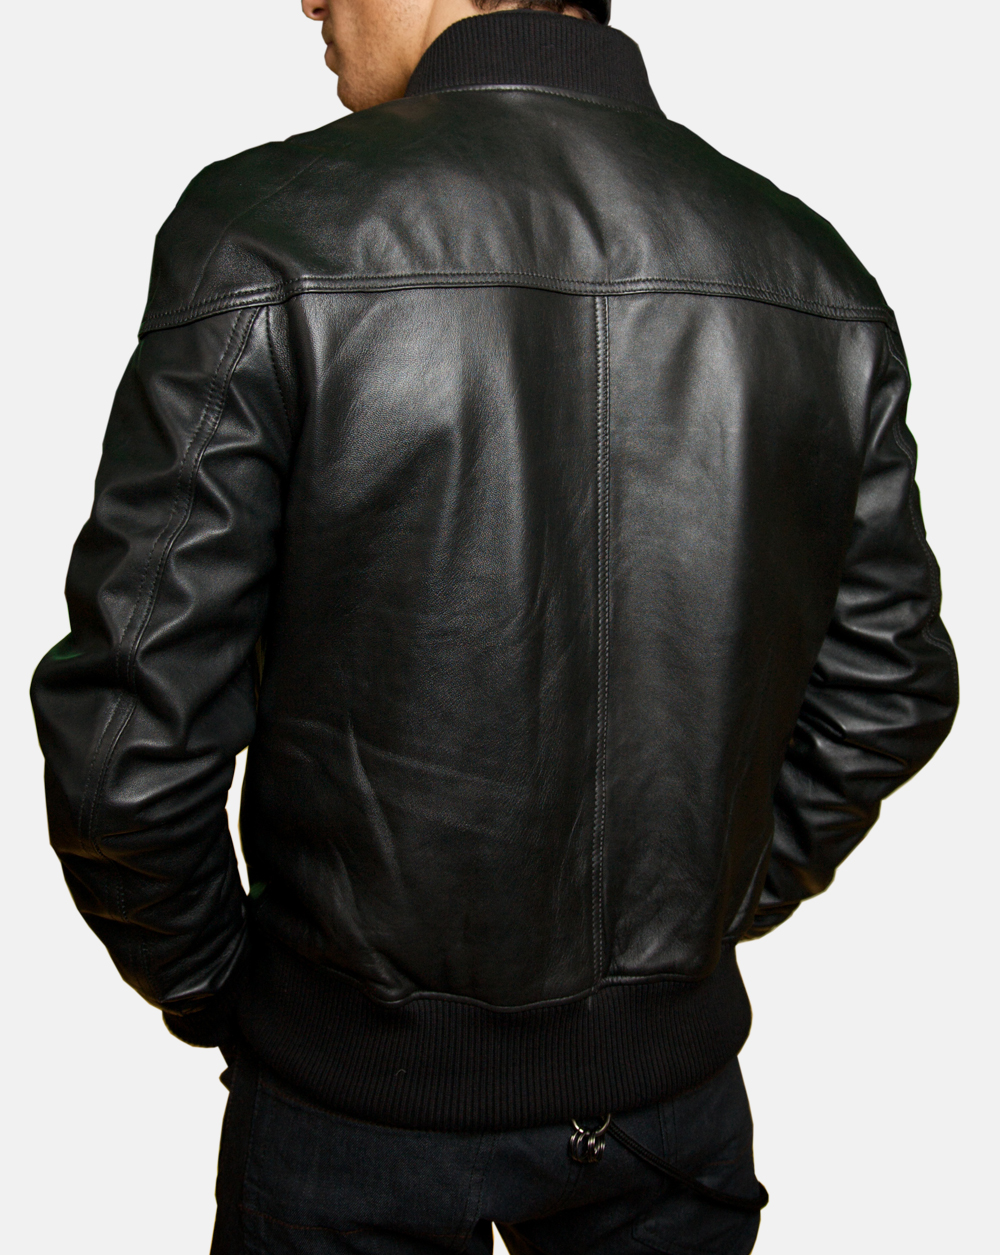 Buy Toulon Leather Jacket